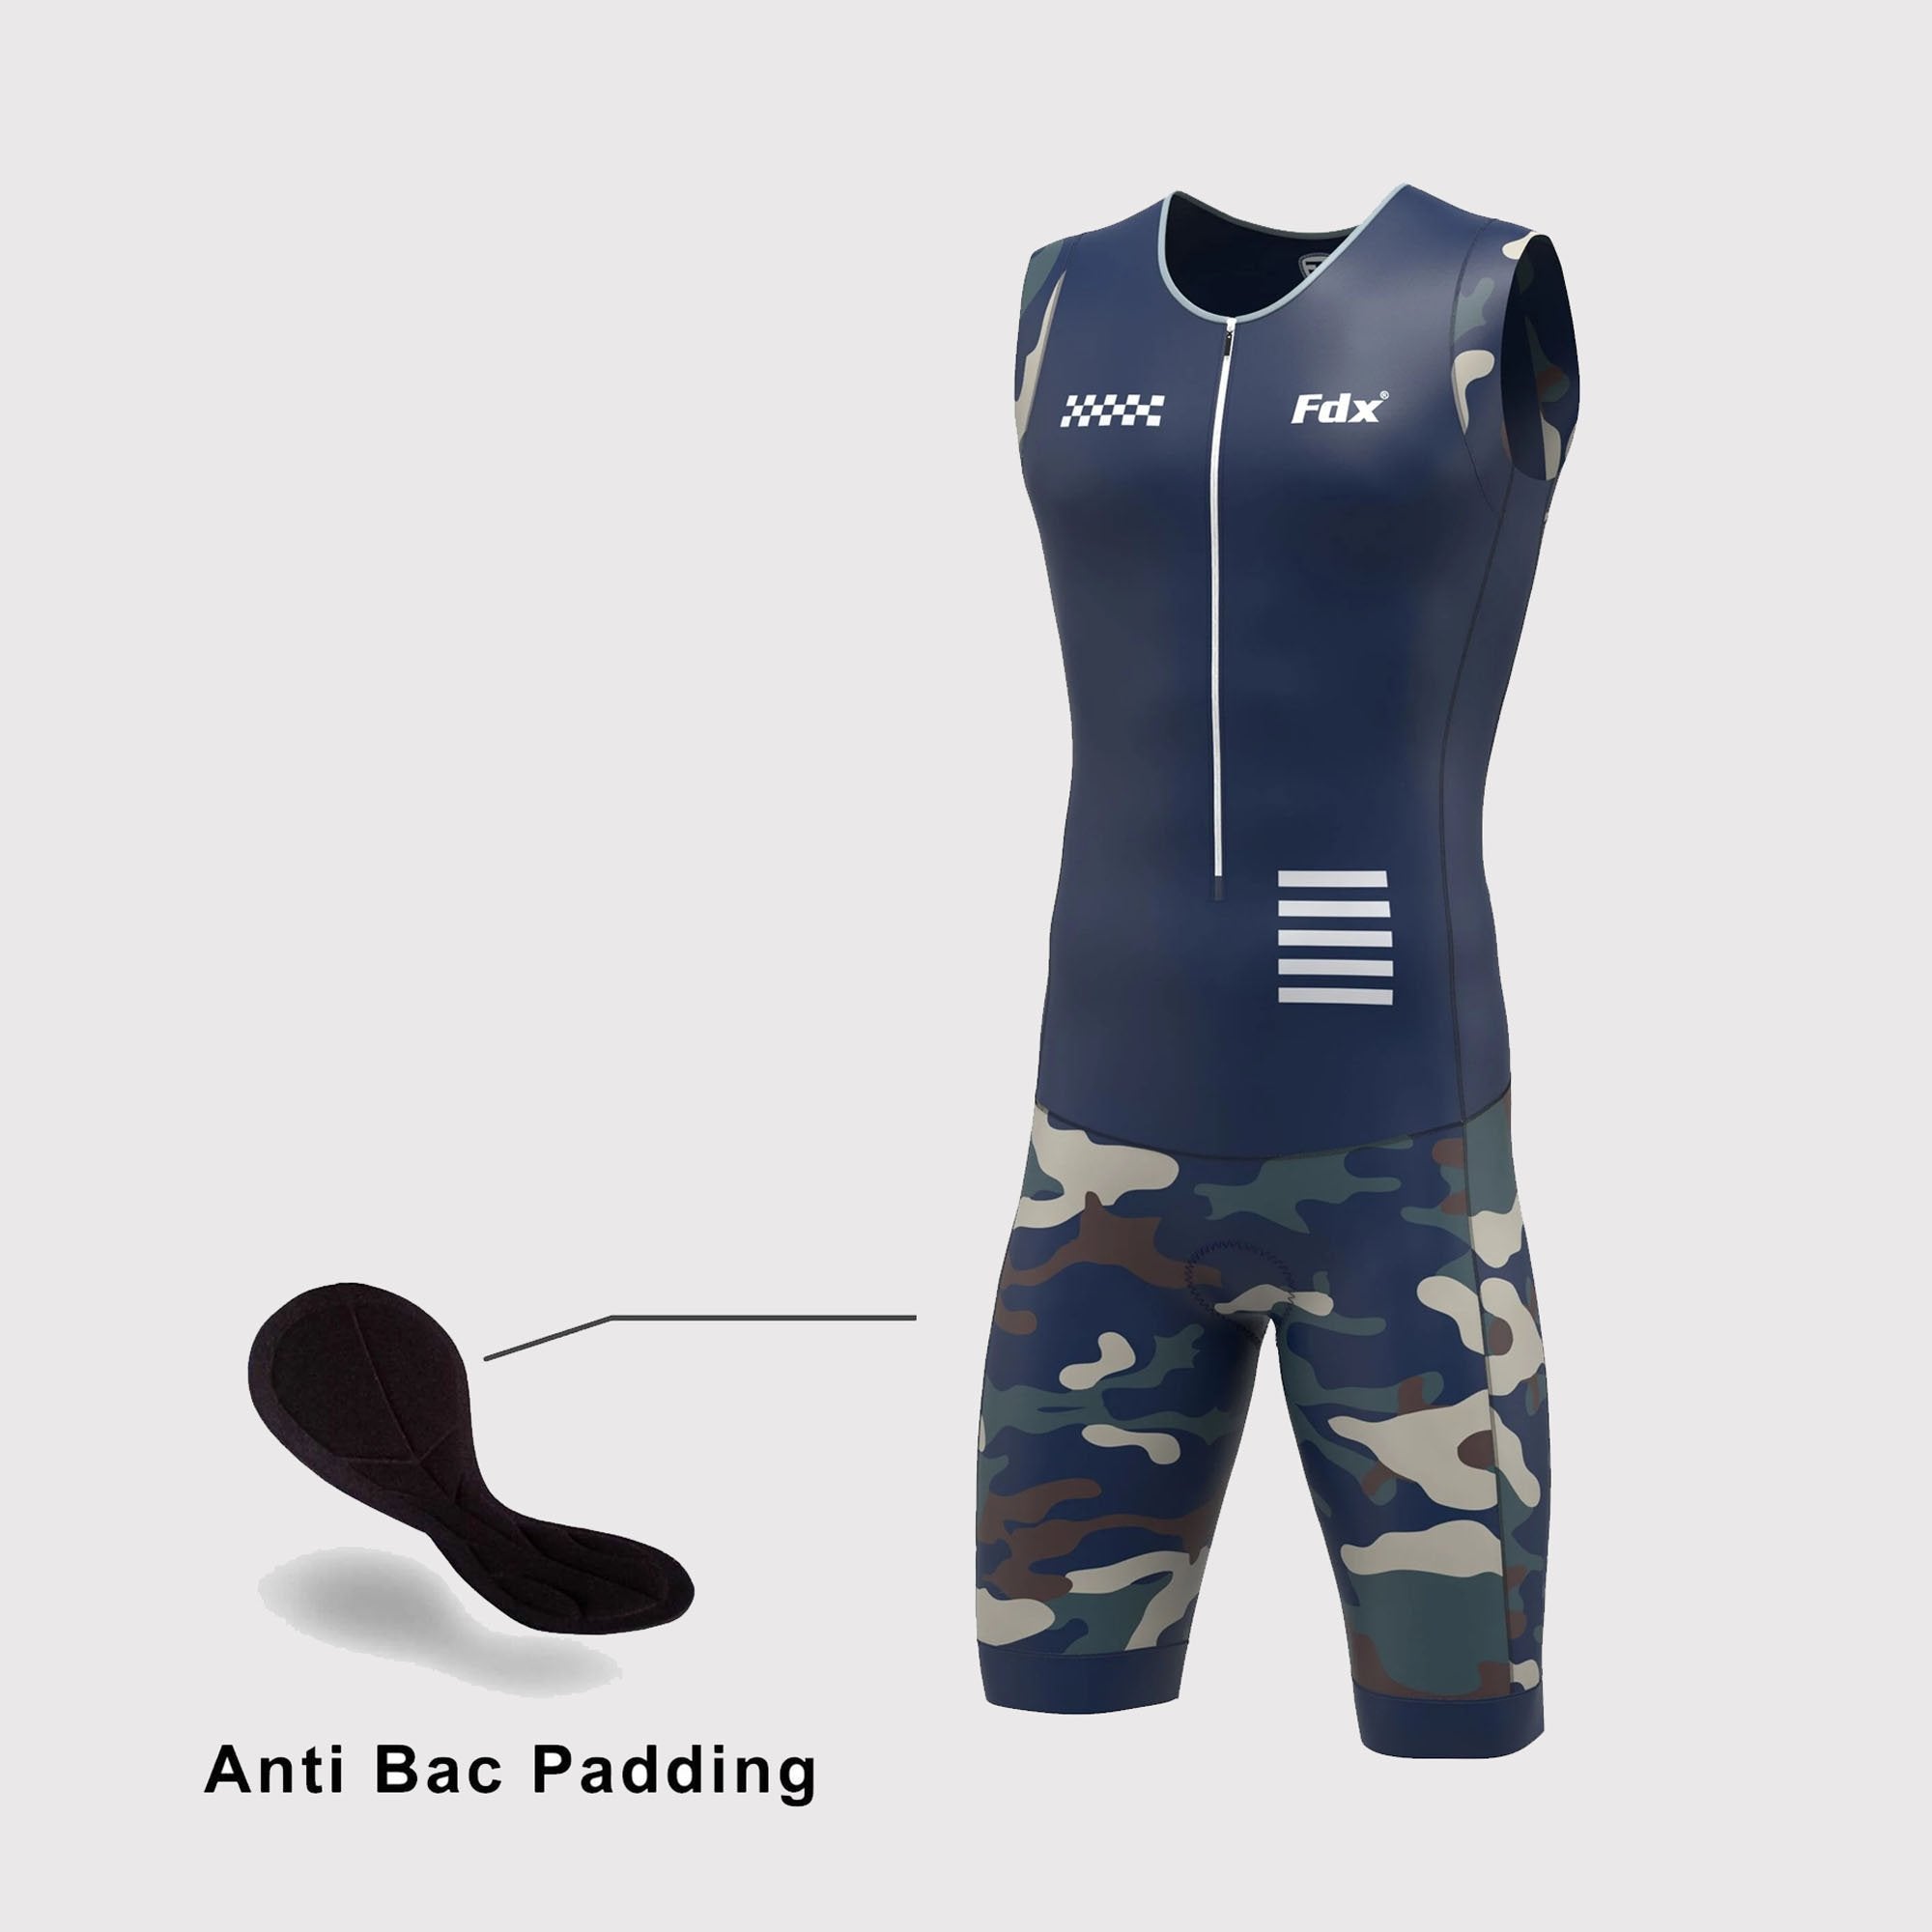 Fdx Camouflage Navy Blue Men's Padded Triathlon Suit